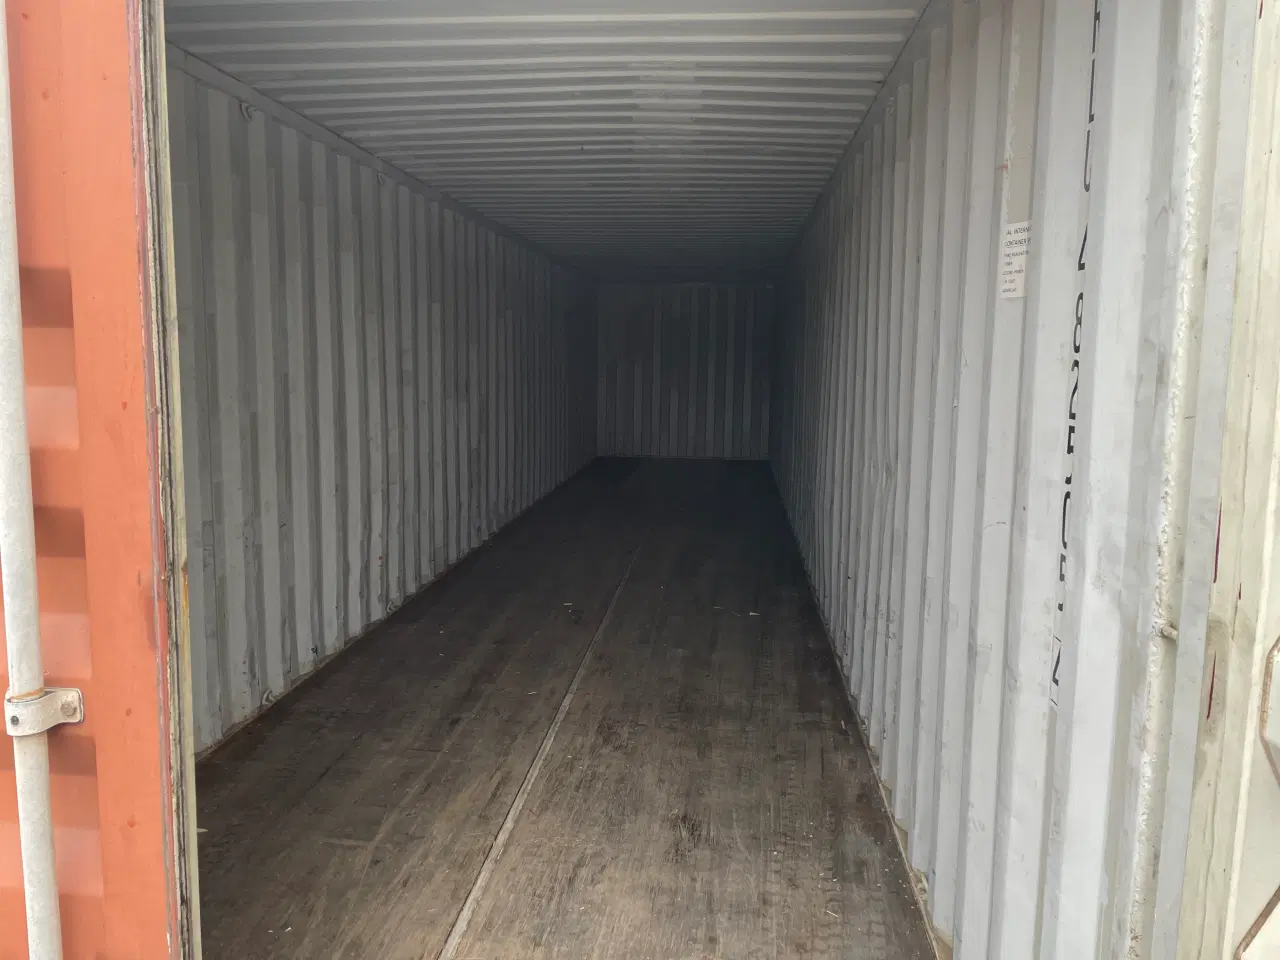 Billede 2 - 40 fods container - ID: TRLU 482505-4